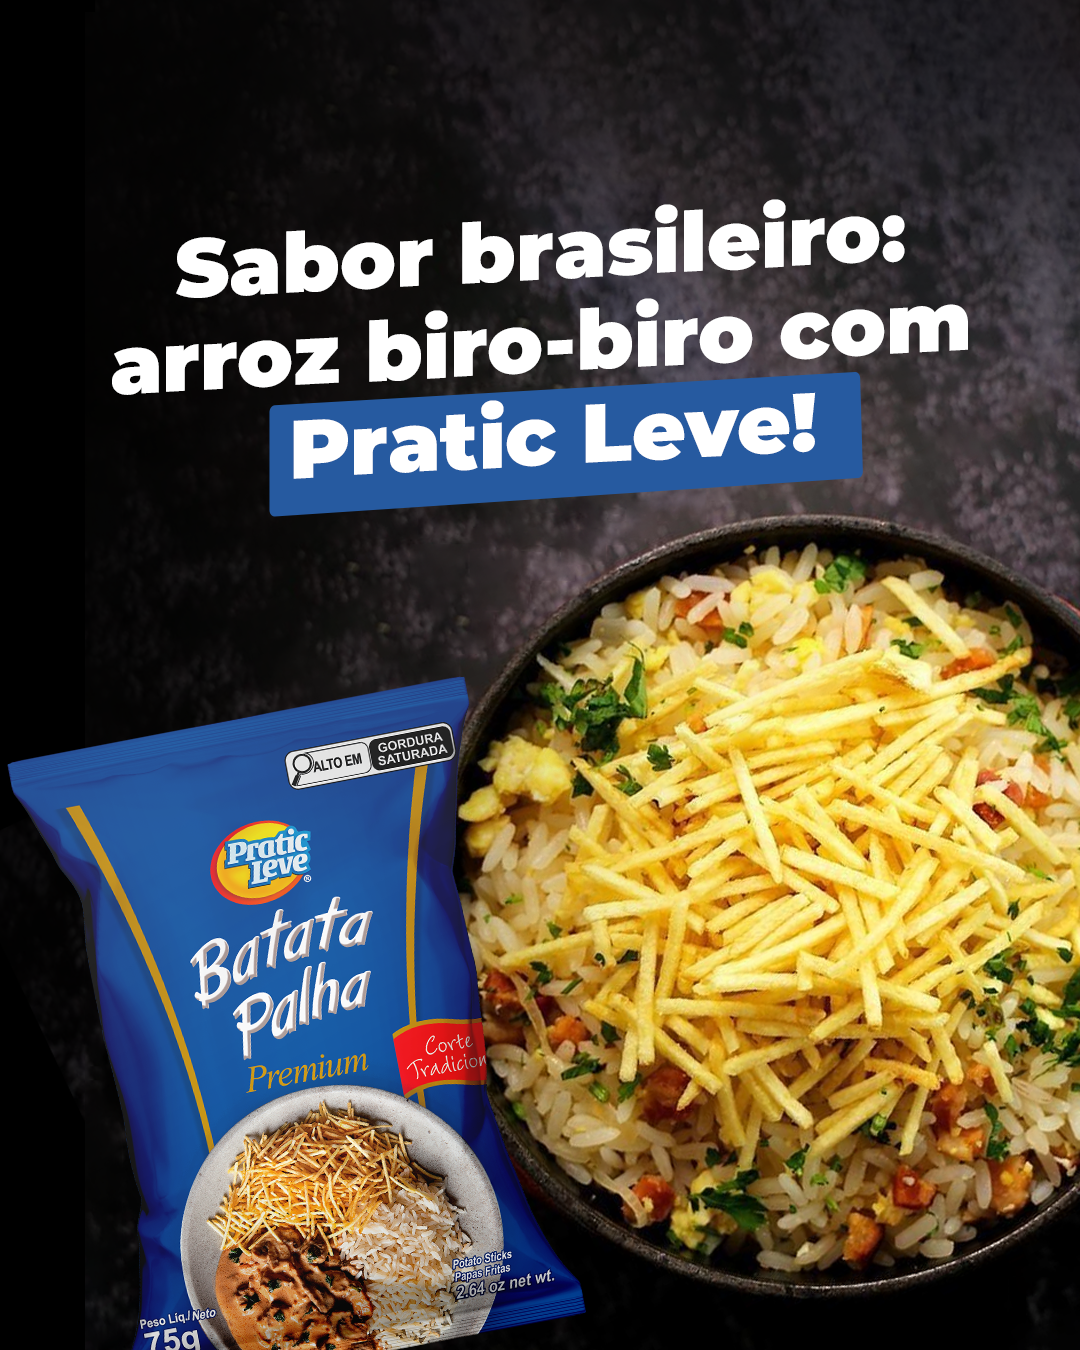 Sabor brasileiro: arroz biro-biro com Pratic Leve!